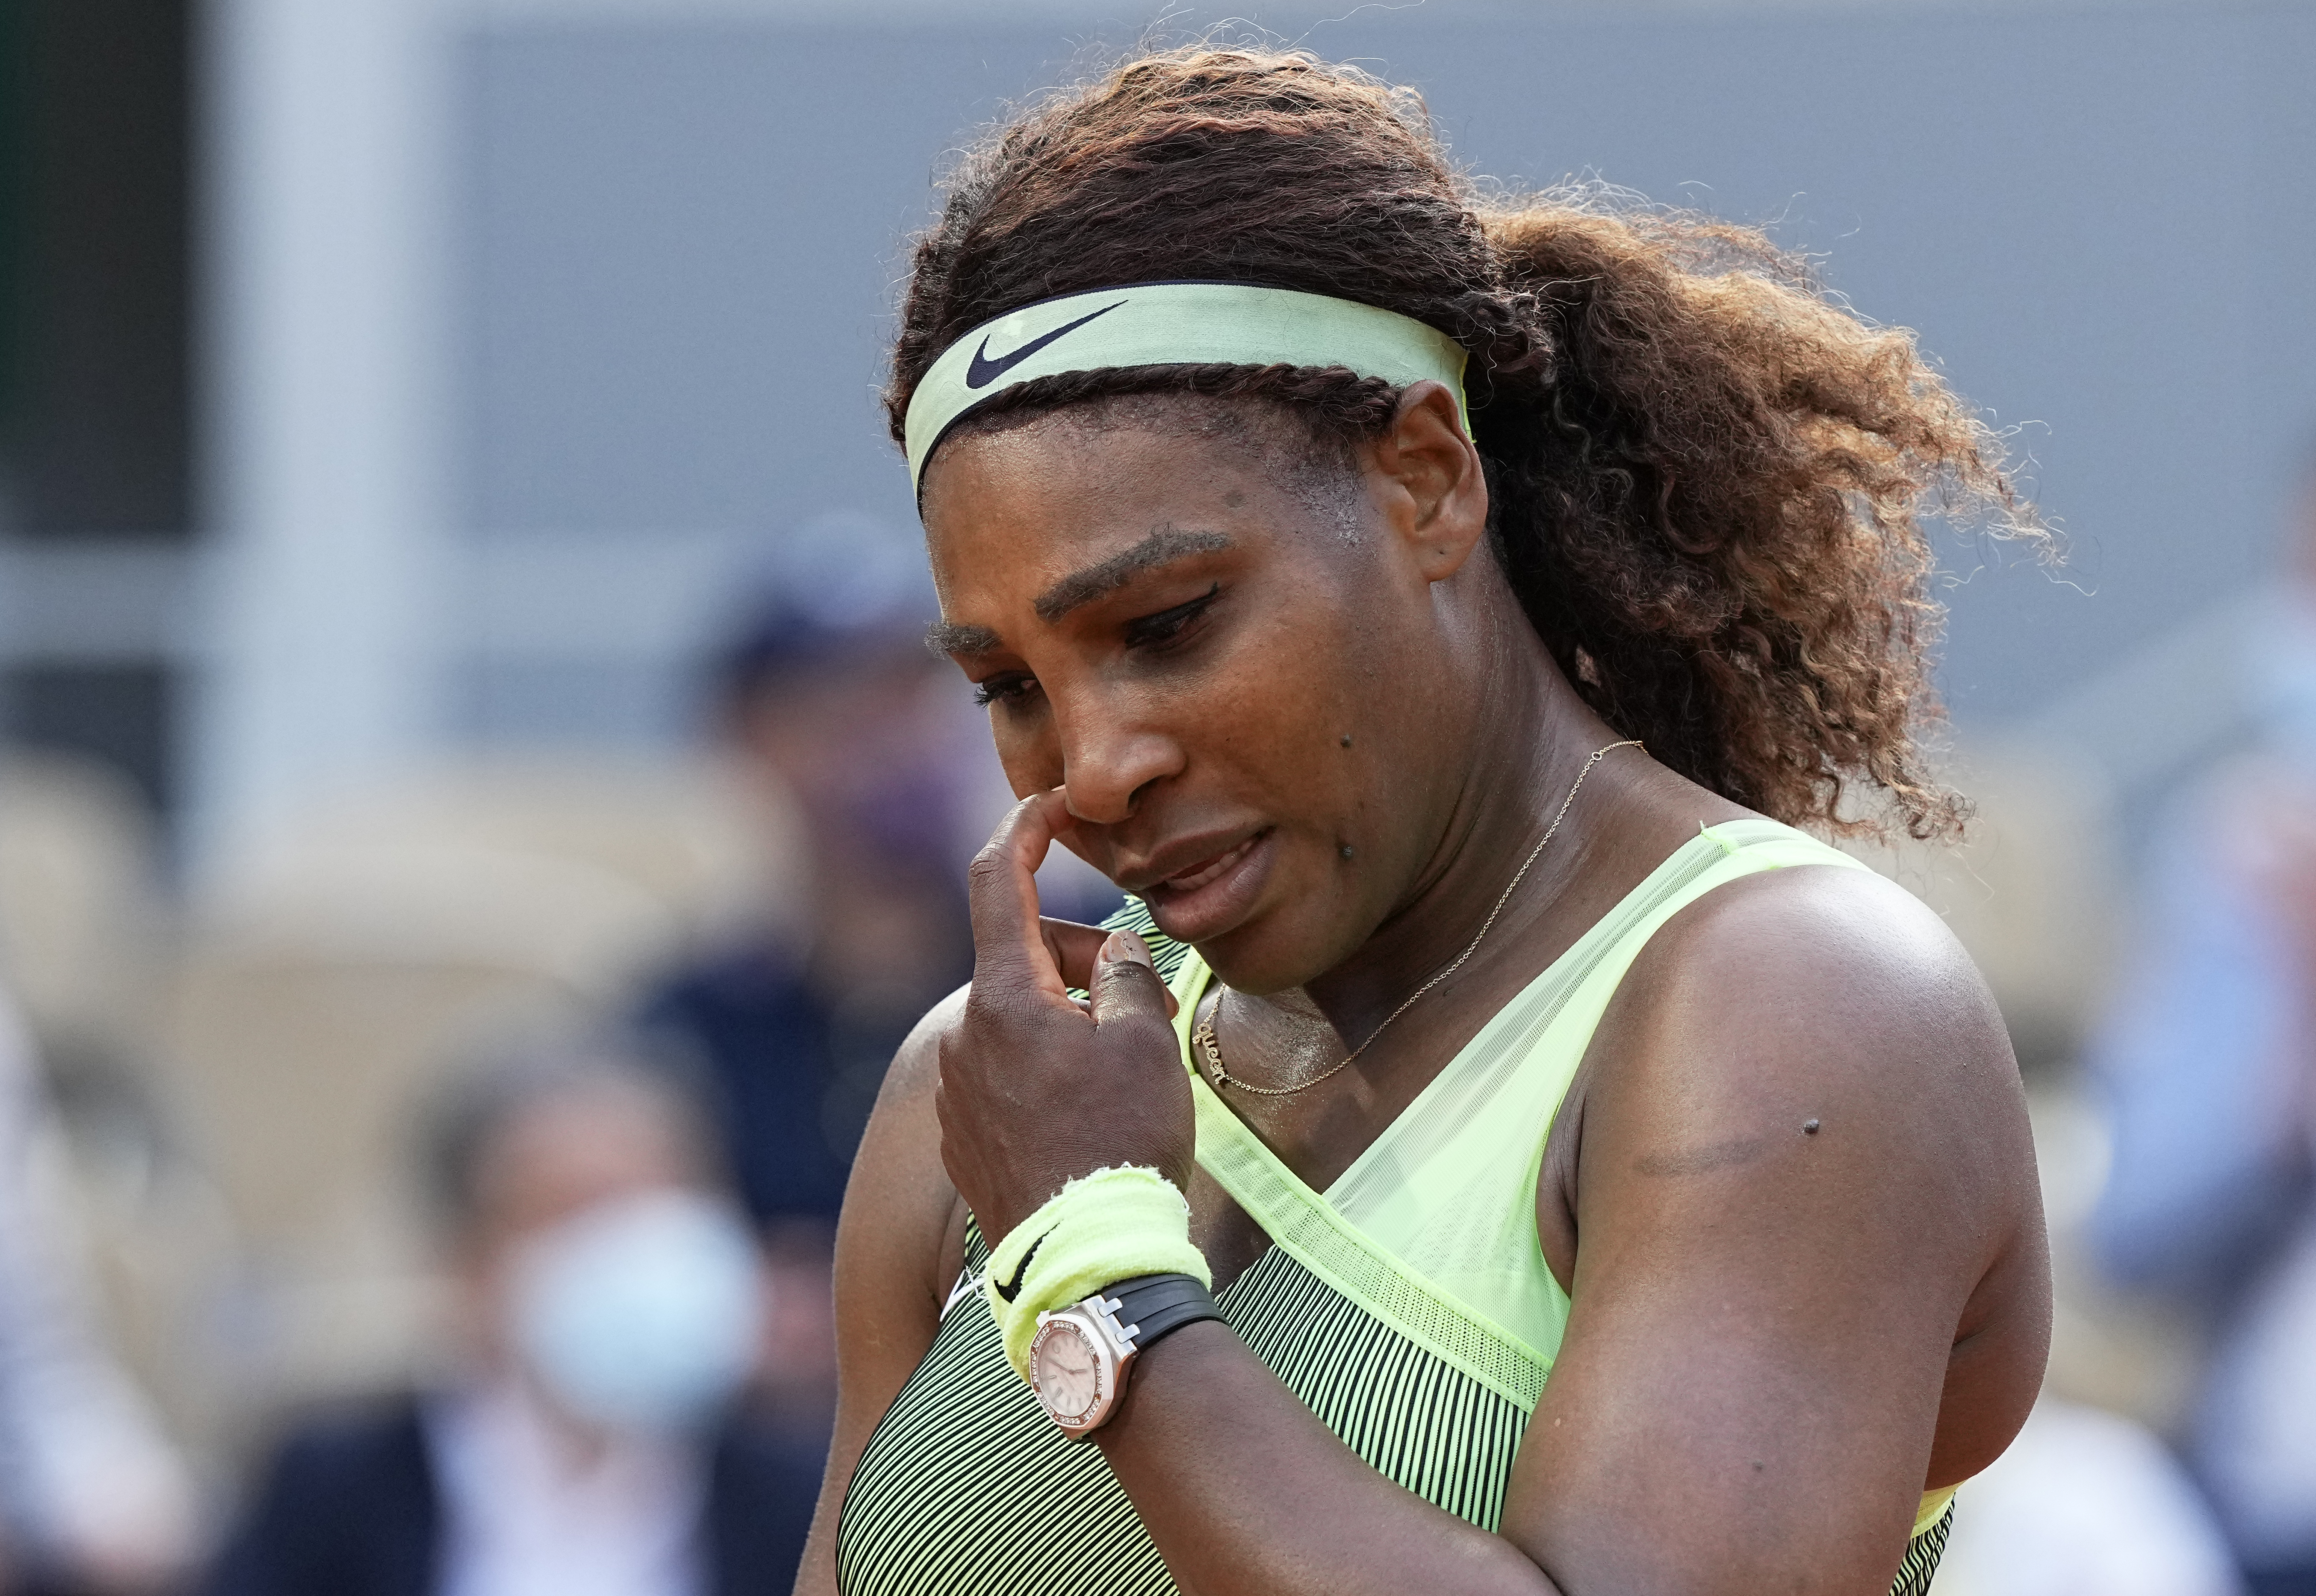 Serena Williams bids early adieu at French Open like Naomi Osaka before her